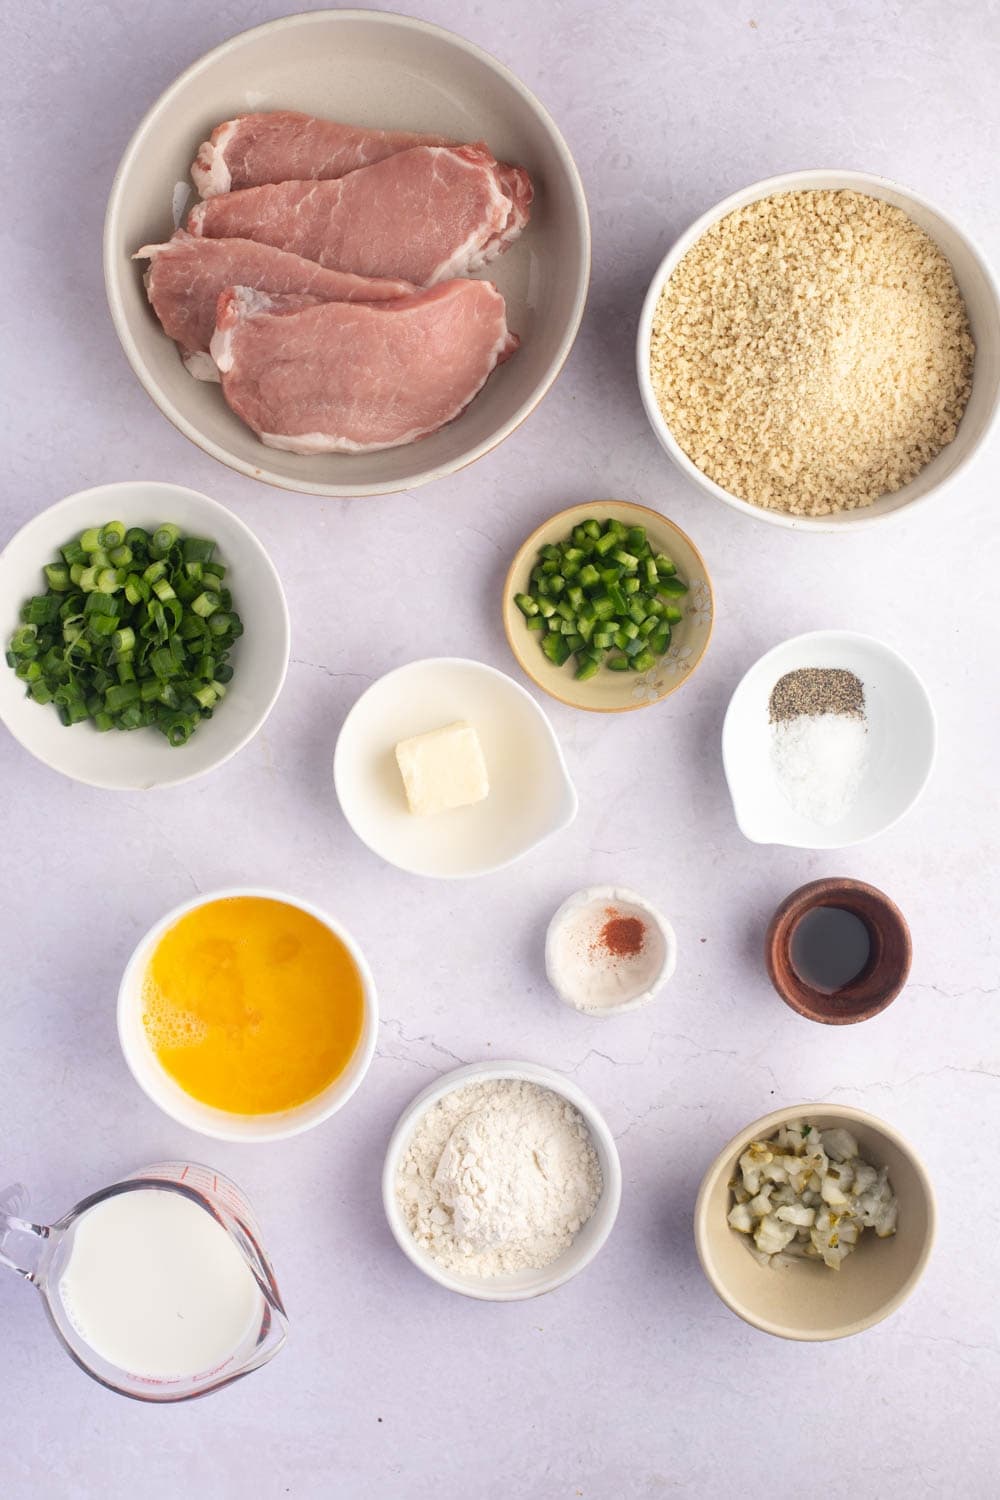 Pork Cutlet Ingredients - Pork, Breadcrumbs, Flour, Egg, Vegetable Oil, Salt and Pepper